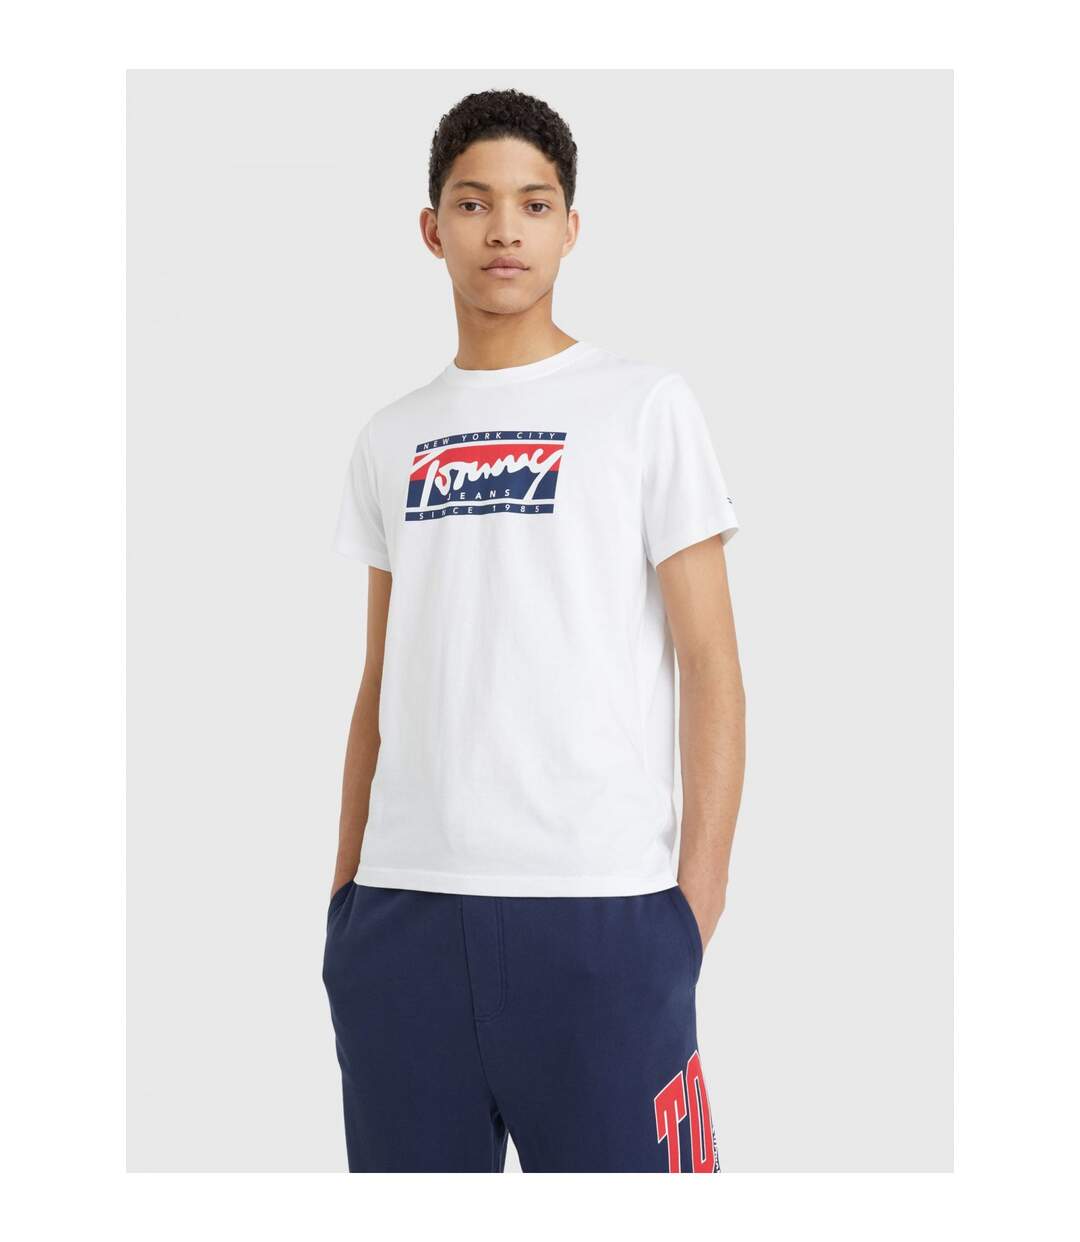 Tee shirt gros logo en coton bio  -  Tommy Jeans - Homme